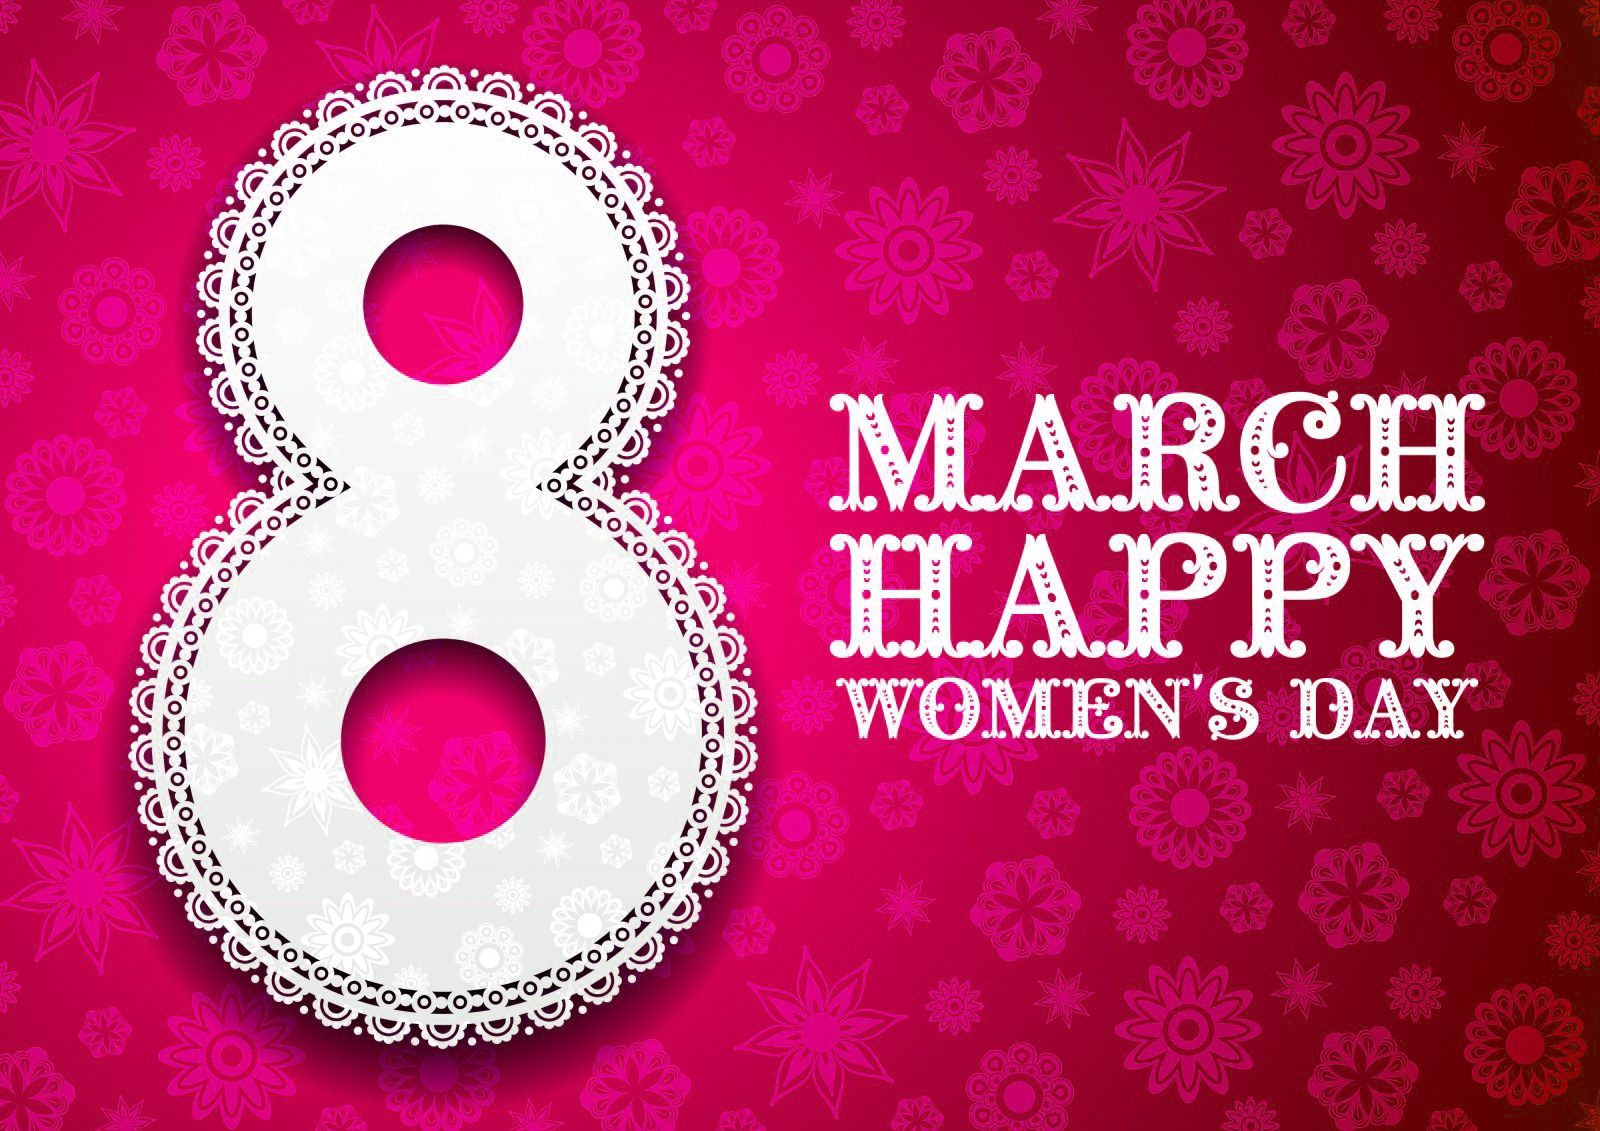 Celebrating International Women's Day in Bangladesh